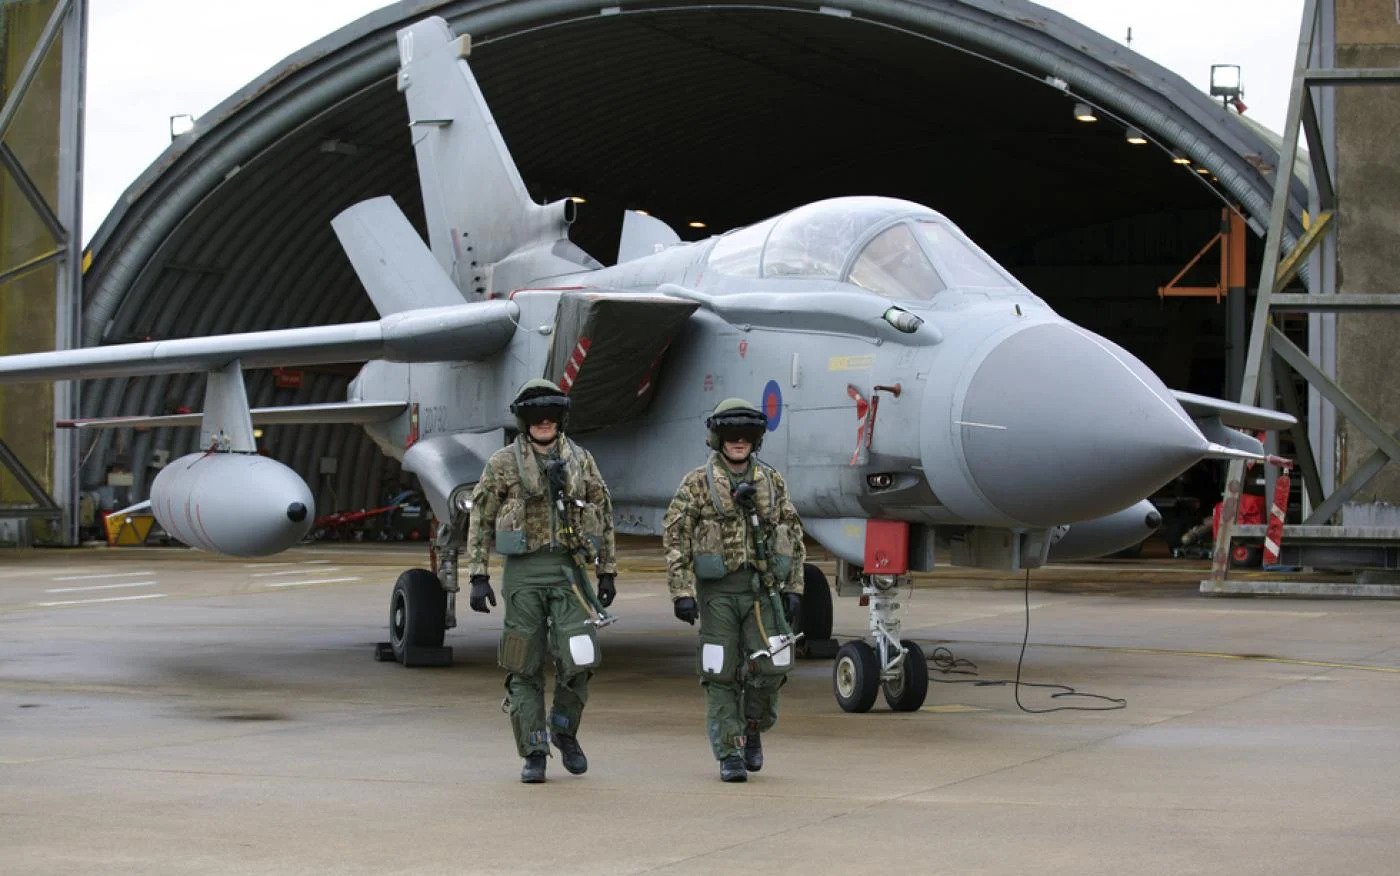 Pilots walk in front of a Tornado GR4 at the British Royal Air Force airbase RAF Marham in Norfolk